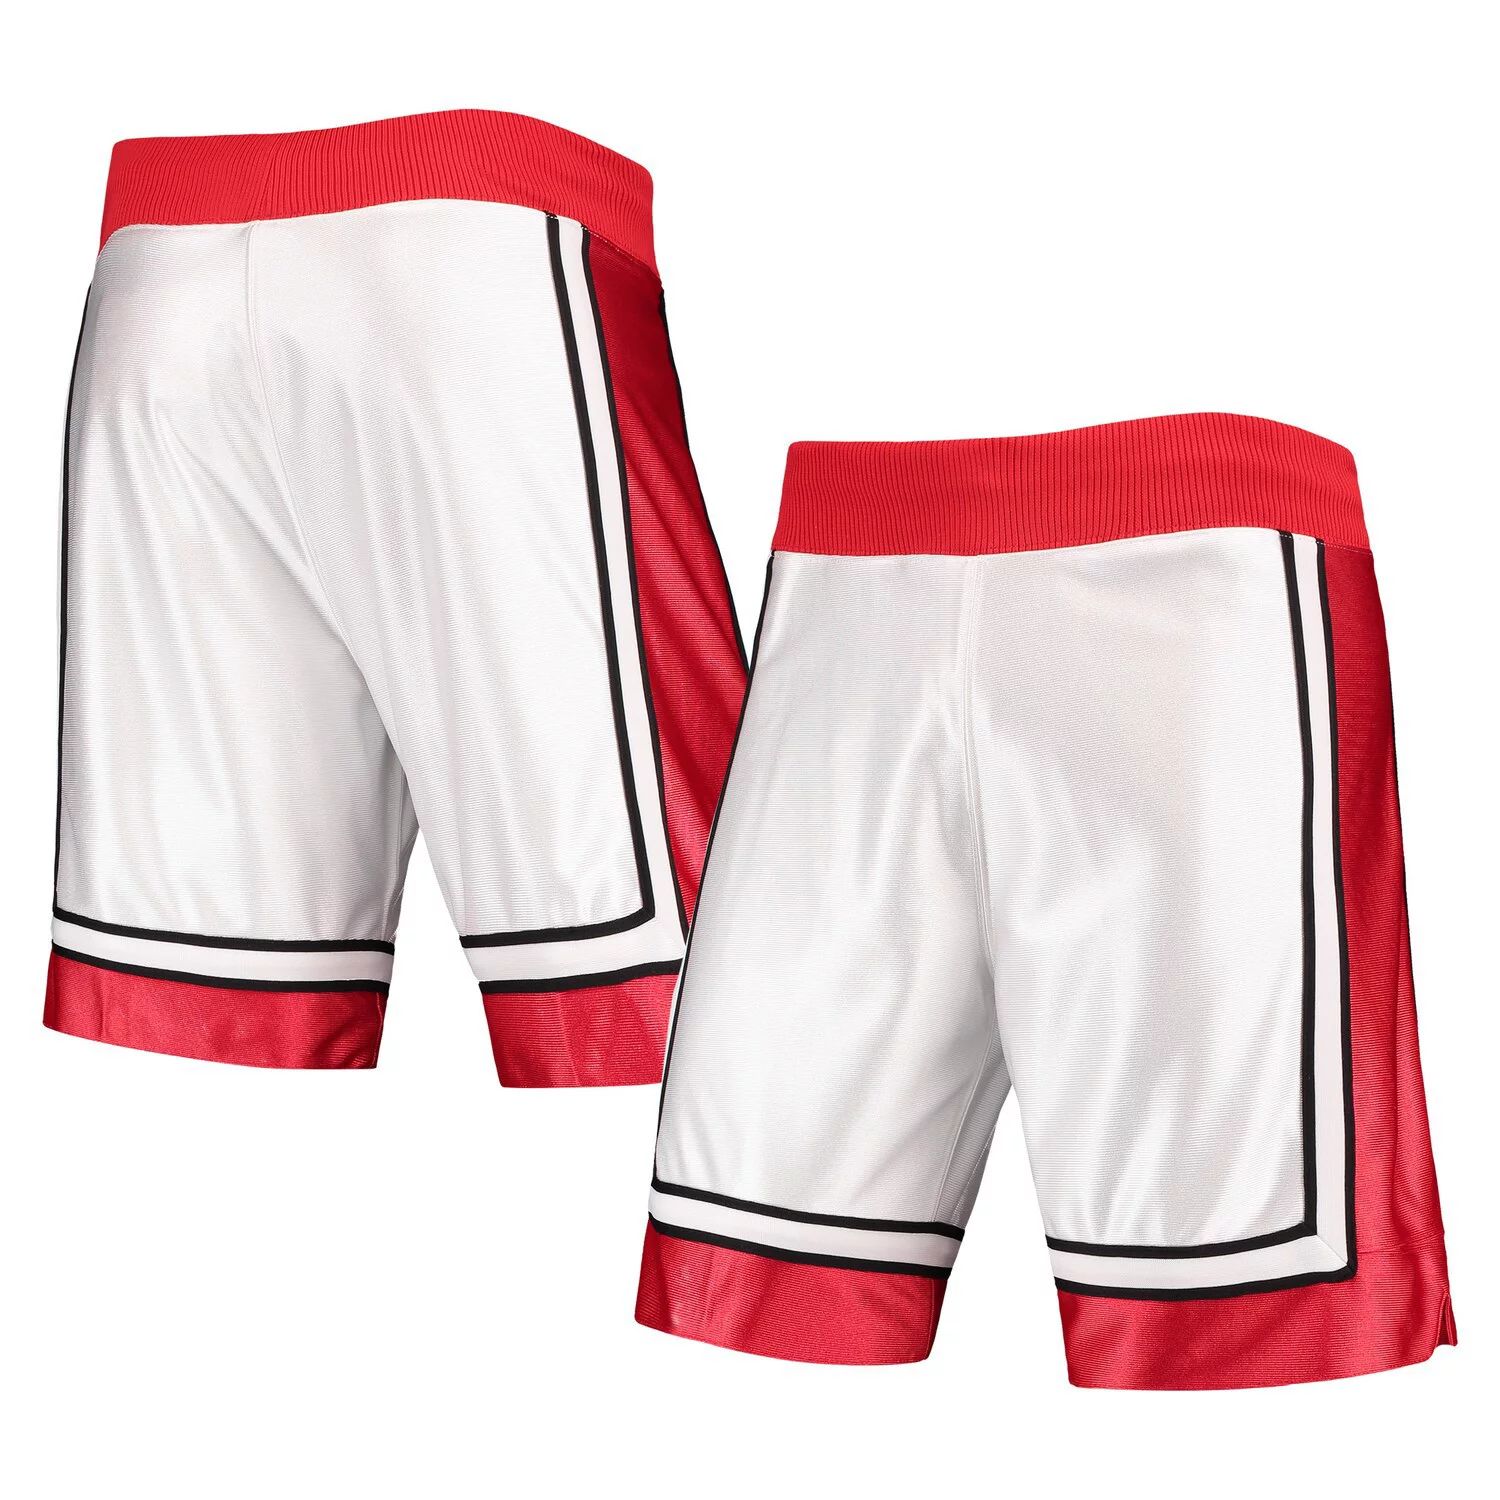 Мужские мужские баскетбольные белые шорты Mitchell & Ness 1989-90 UNLV Rebels Authentic Throwback College Shorts